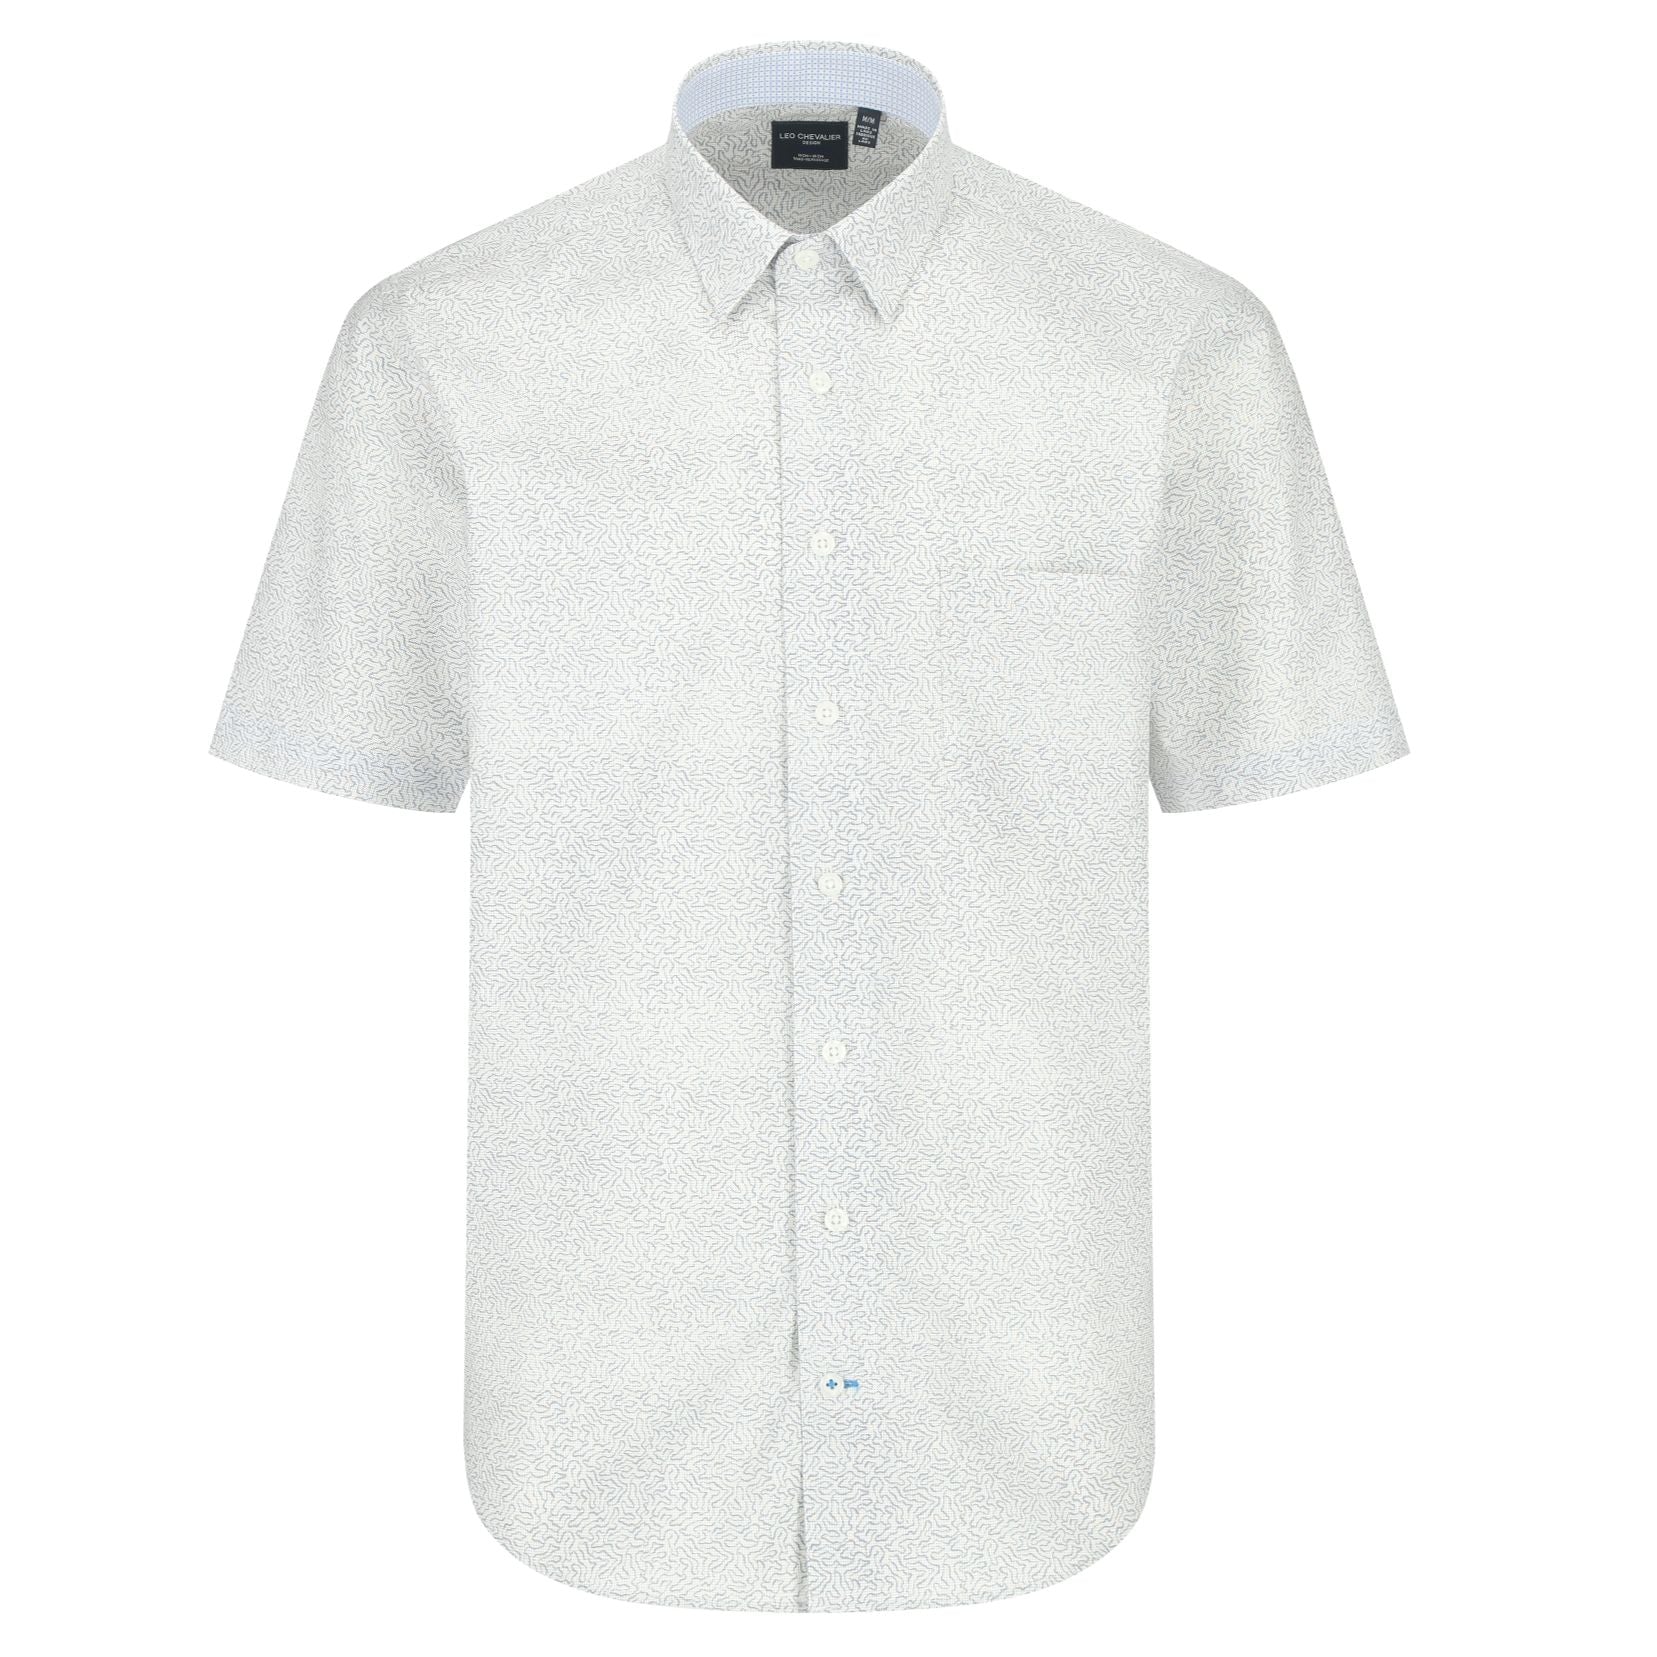 Grey Geometric Wave Print Short Sleeve No-Iron Cotton Sport Shirt with Hidden Button Down Collar by Leo Chevalier